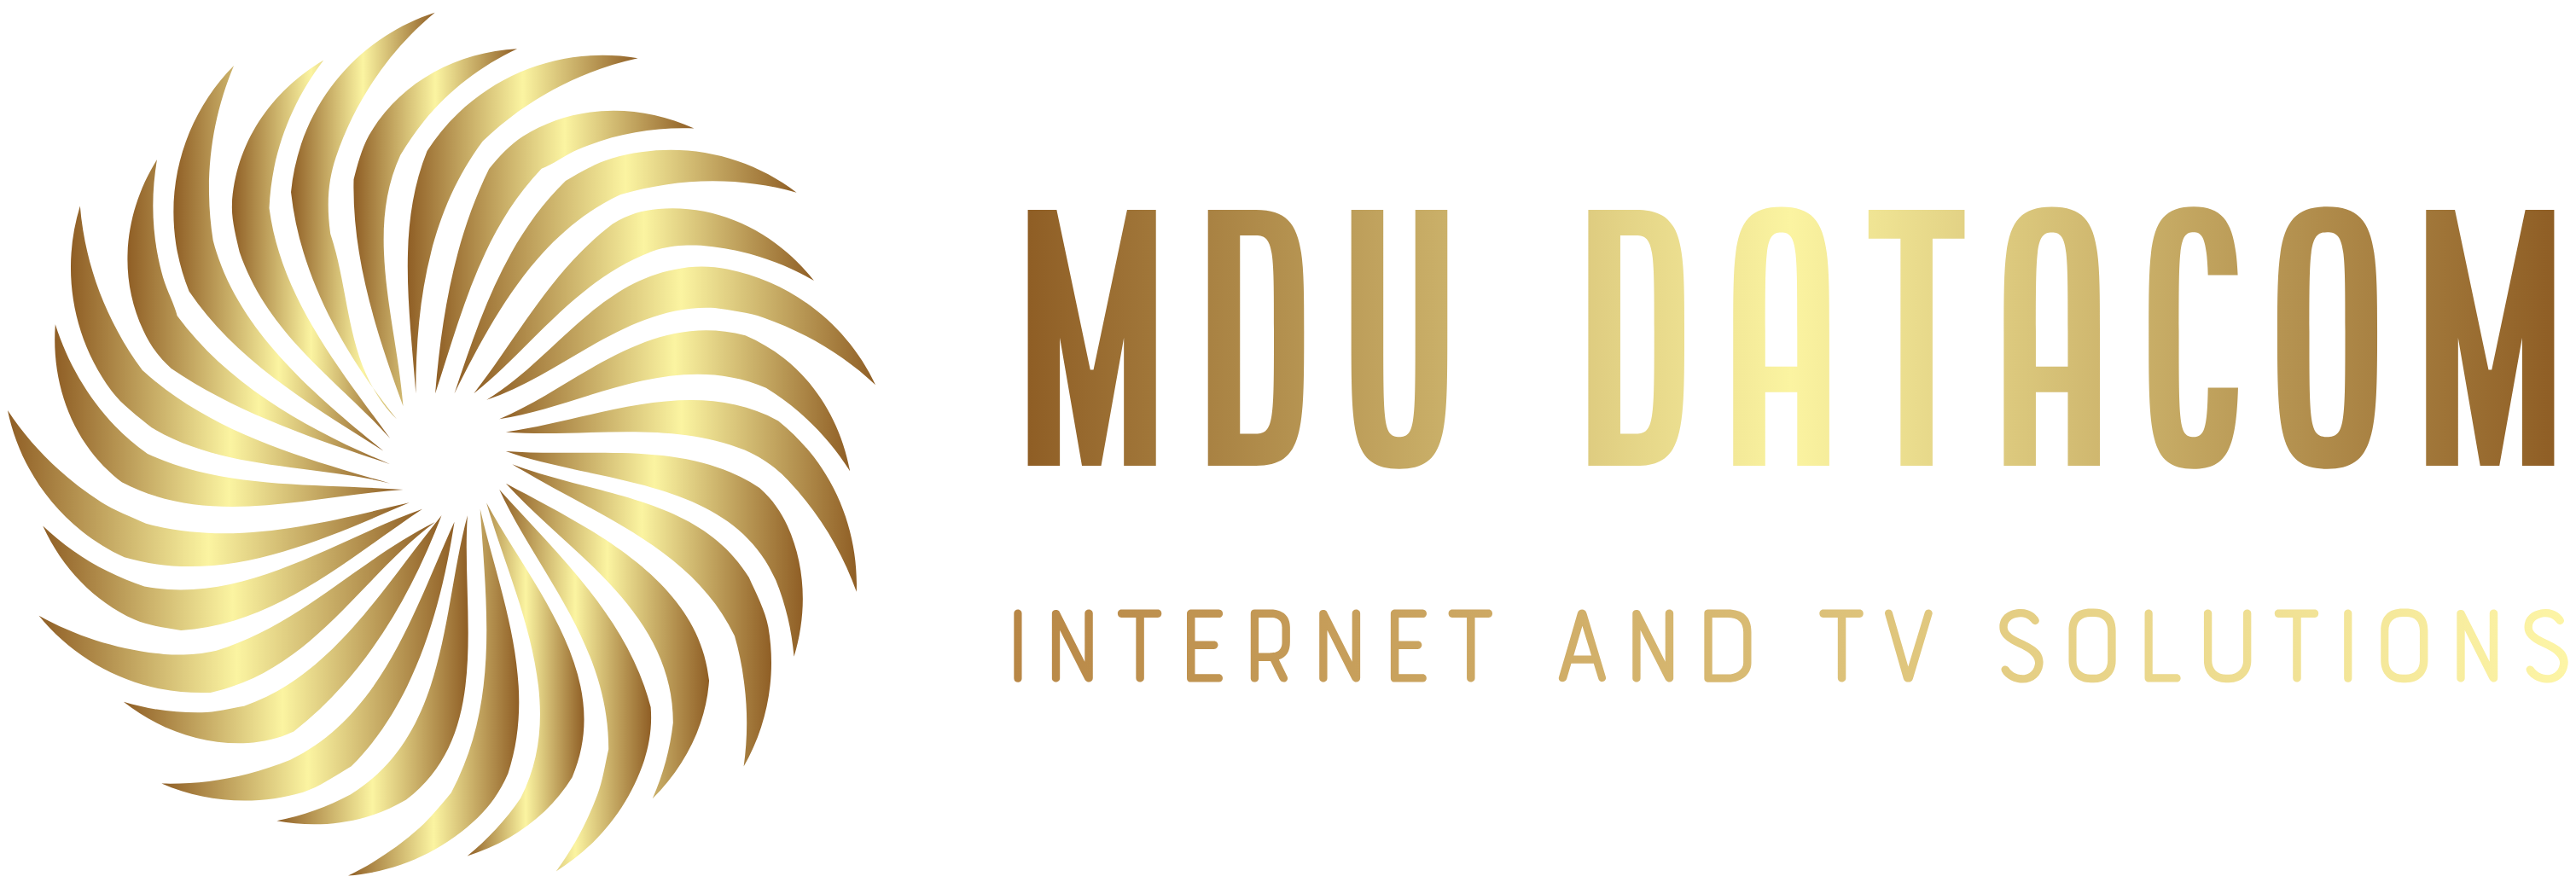 MDU-SiteLogo.png